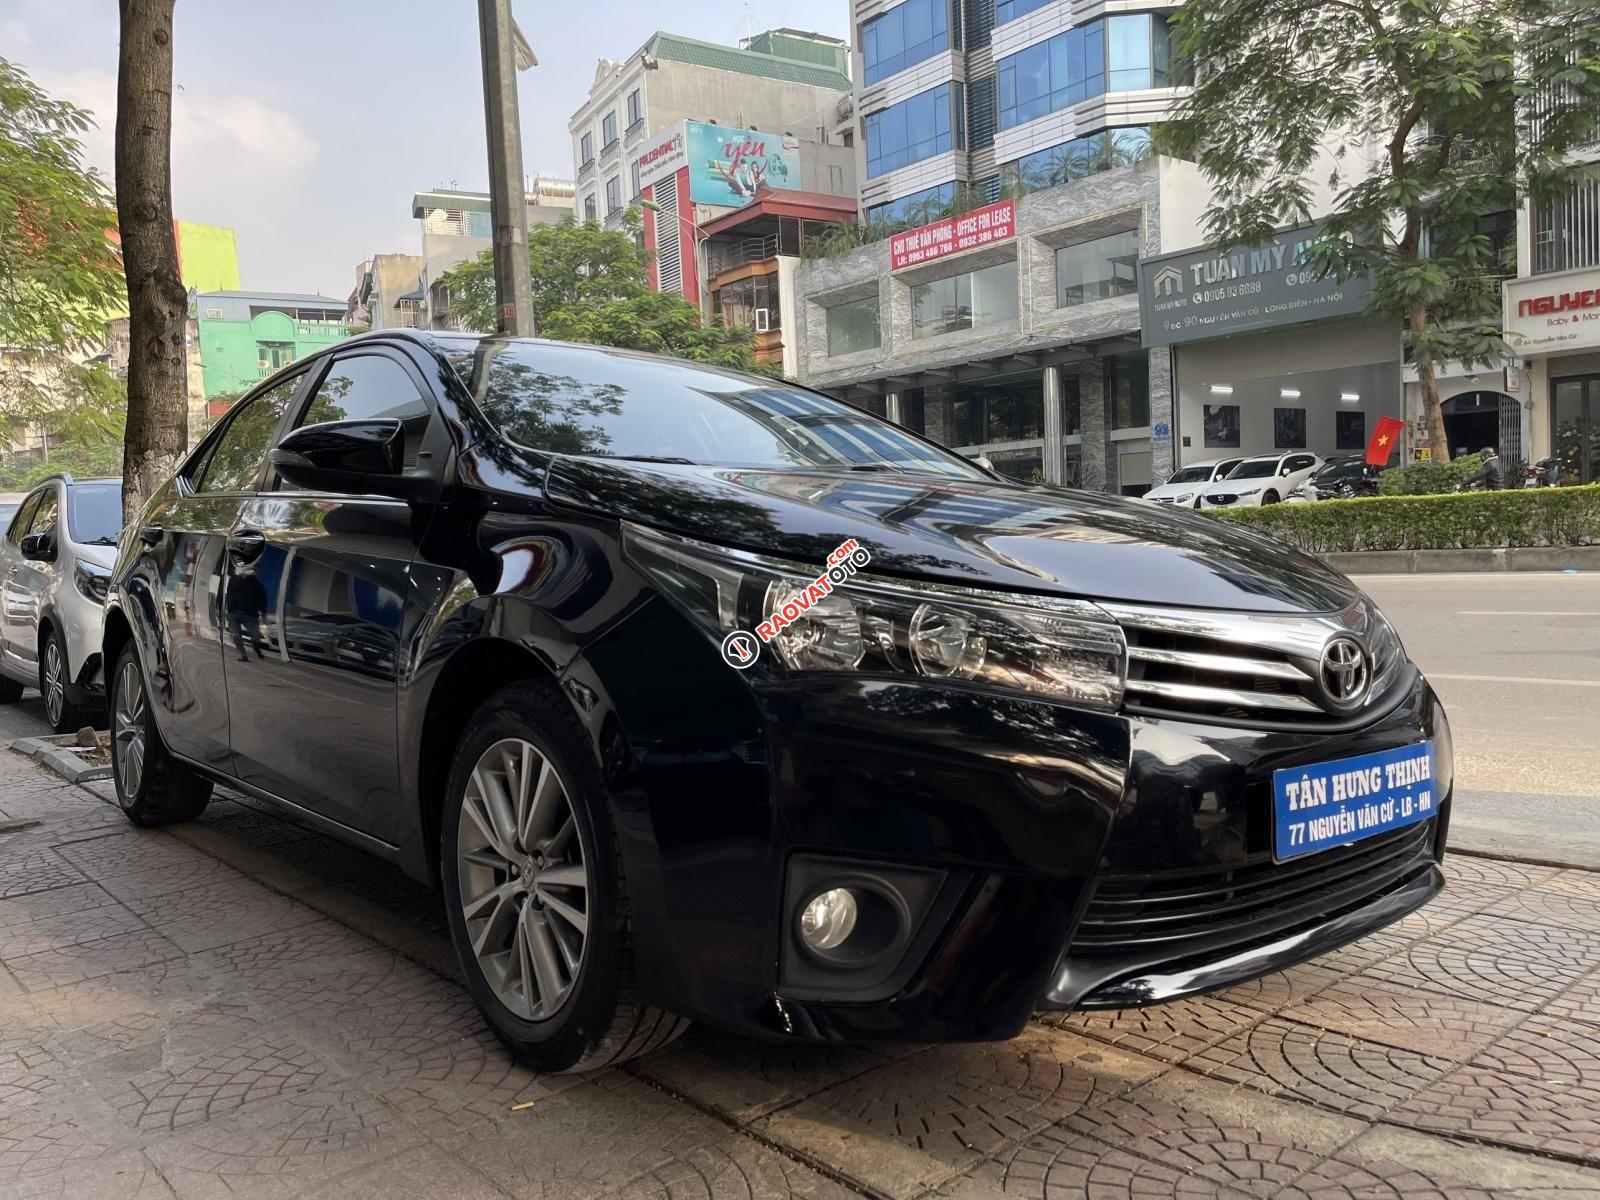 Bán gấp Toyota Corolla Altis 1.8G AT năm 2017, màu đen, còn nguyên dàn lốp, xe rất mới, giá tốt-2